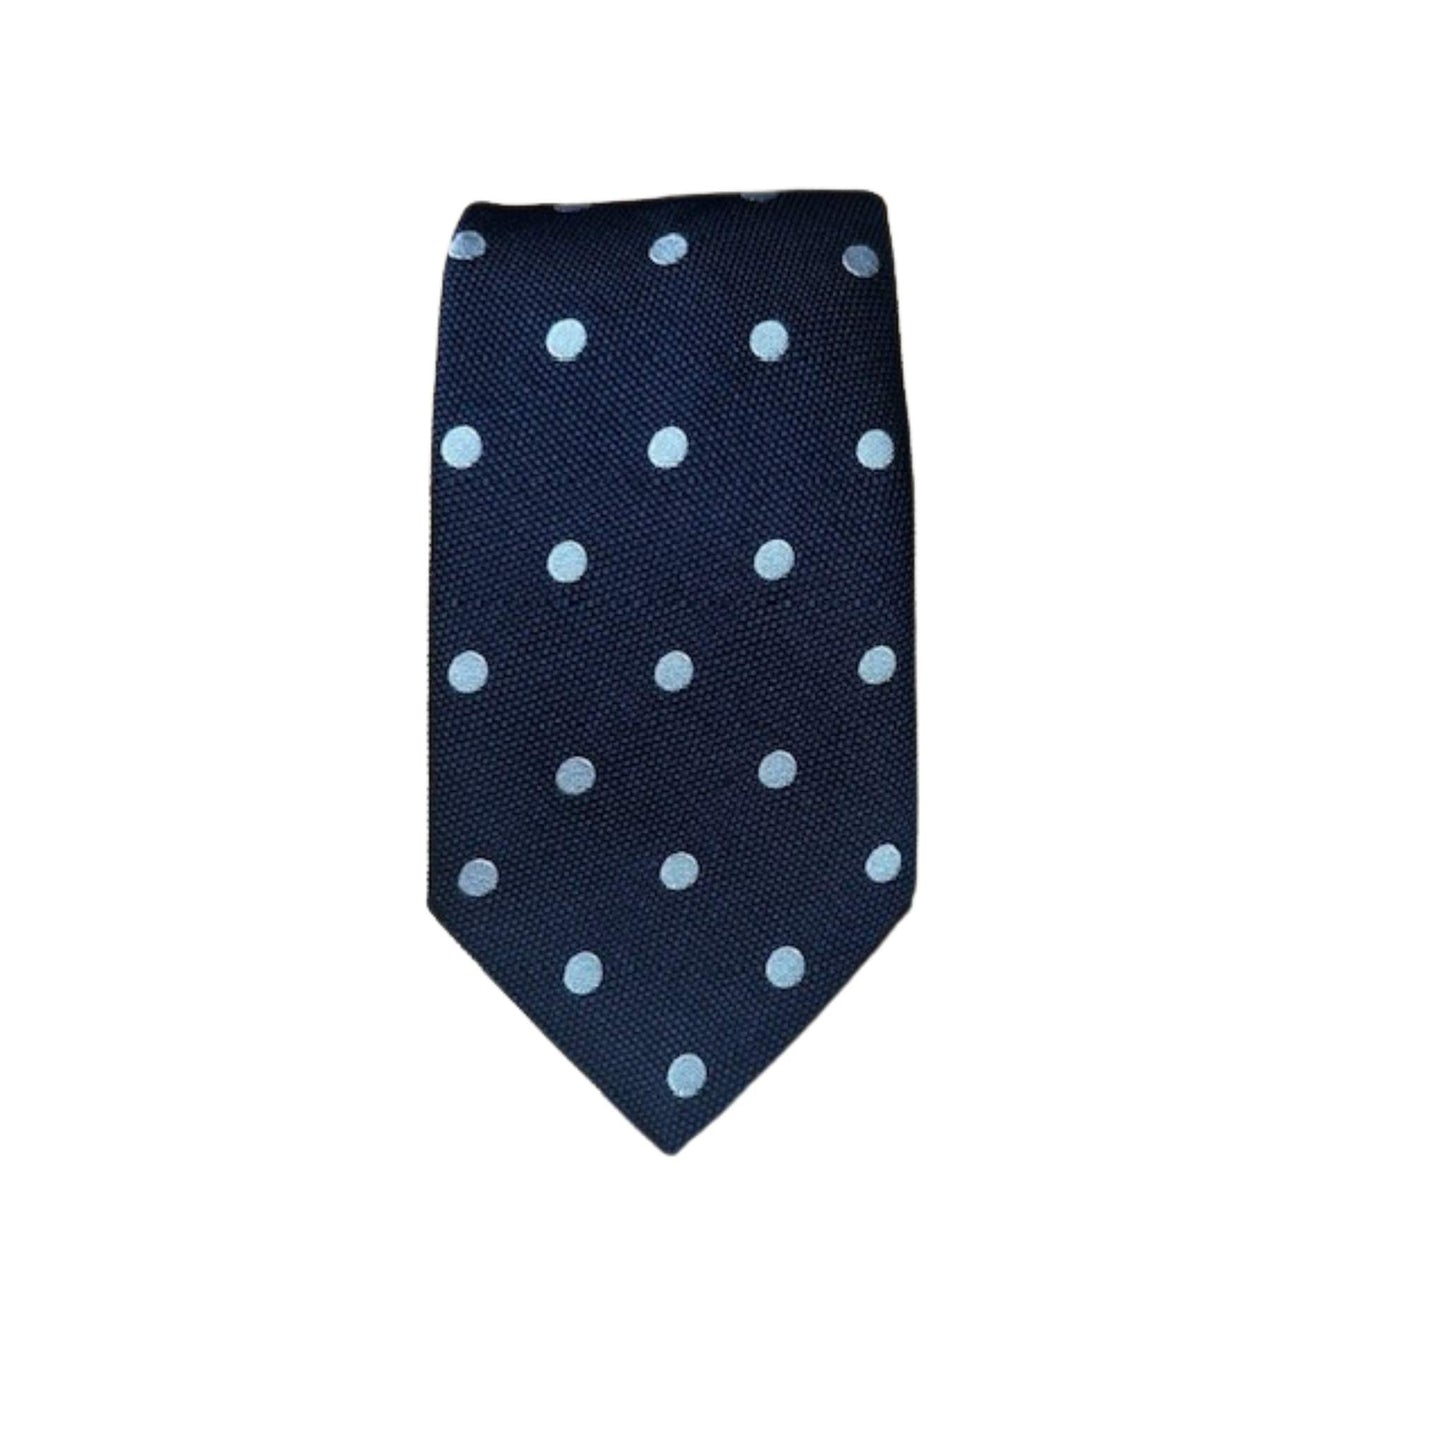 Rhodes Wood  Navy and light Blue spot tie